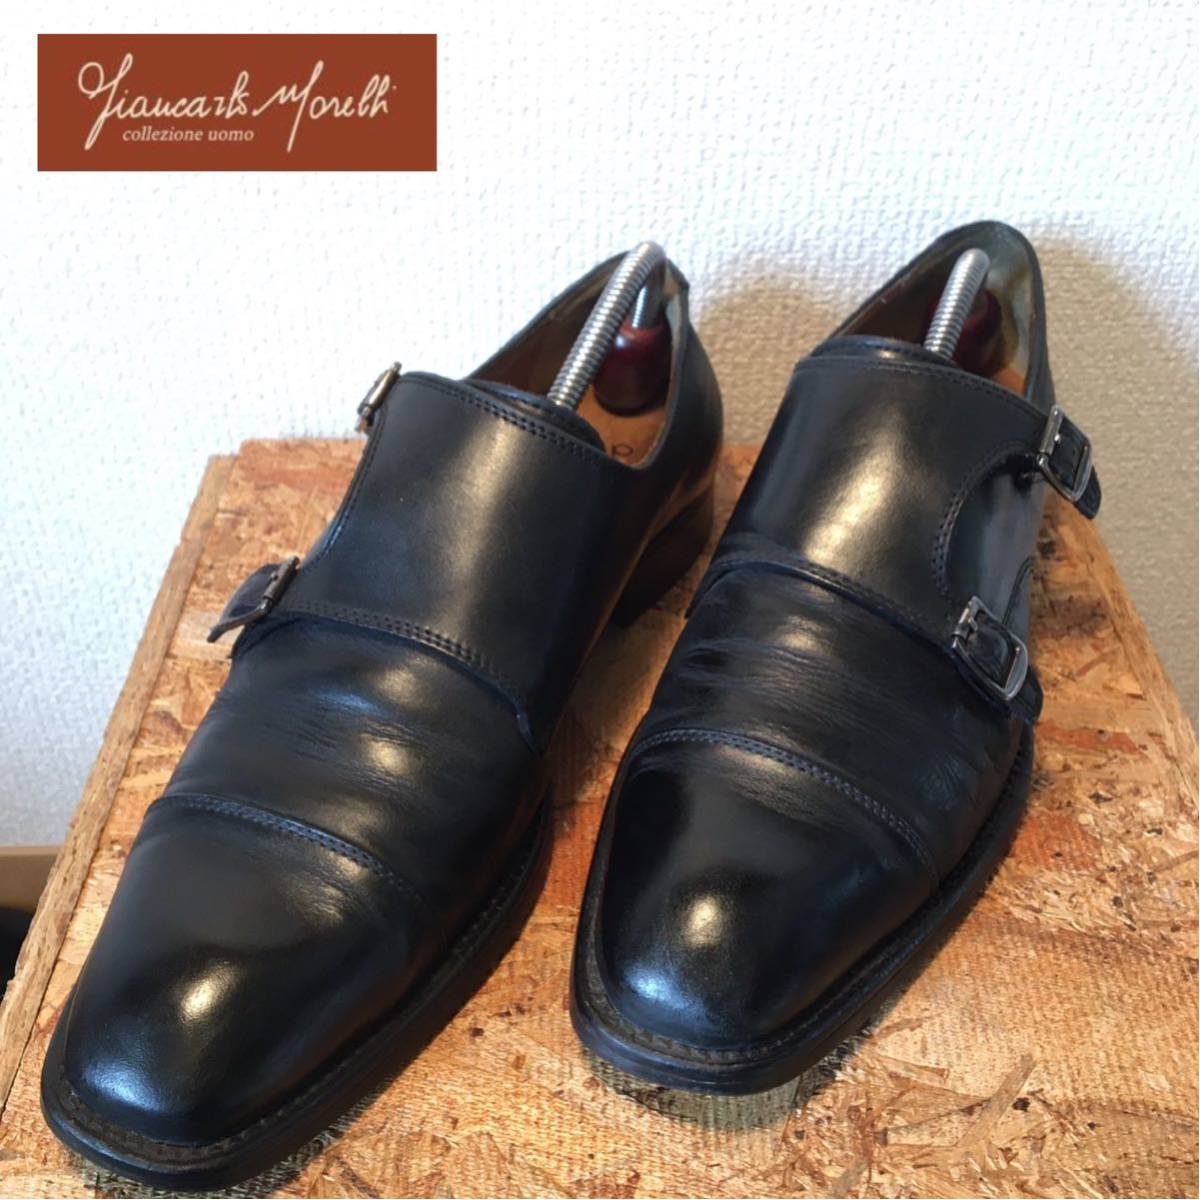 (192)G.C.morelli ジャンカルロモレリ 【41(26cm相当)】黒 ダブルモンクストラップ ストレートチップ ビジネスシューズ 革靴 紳士靴の画像1